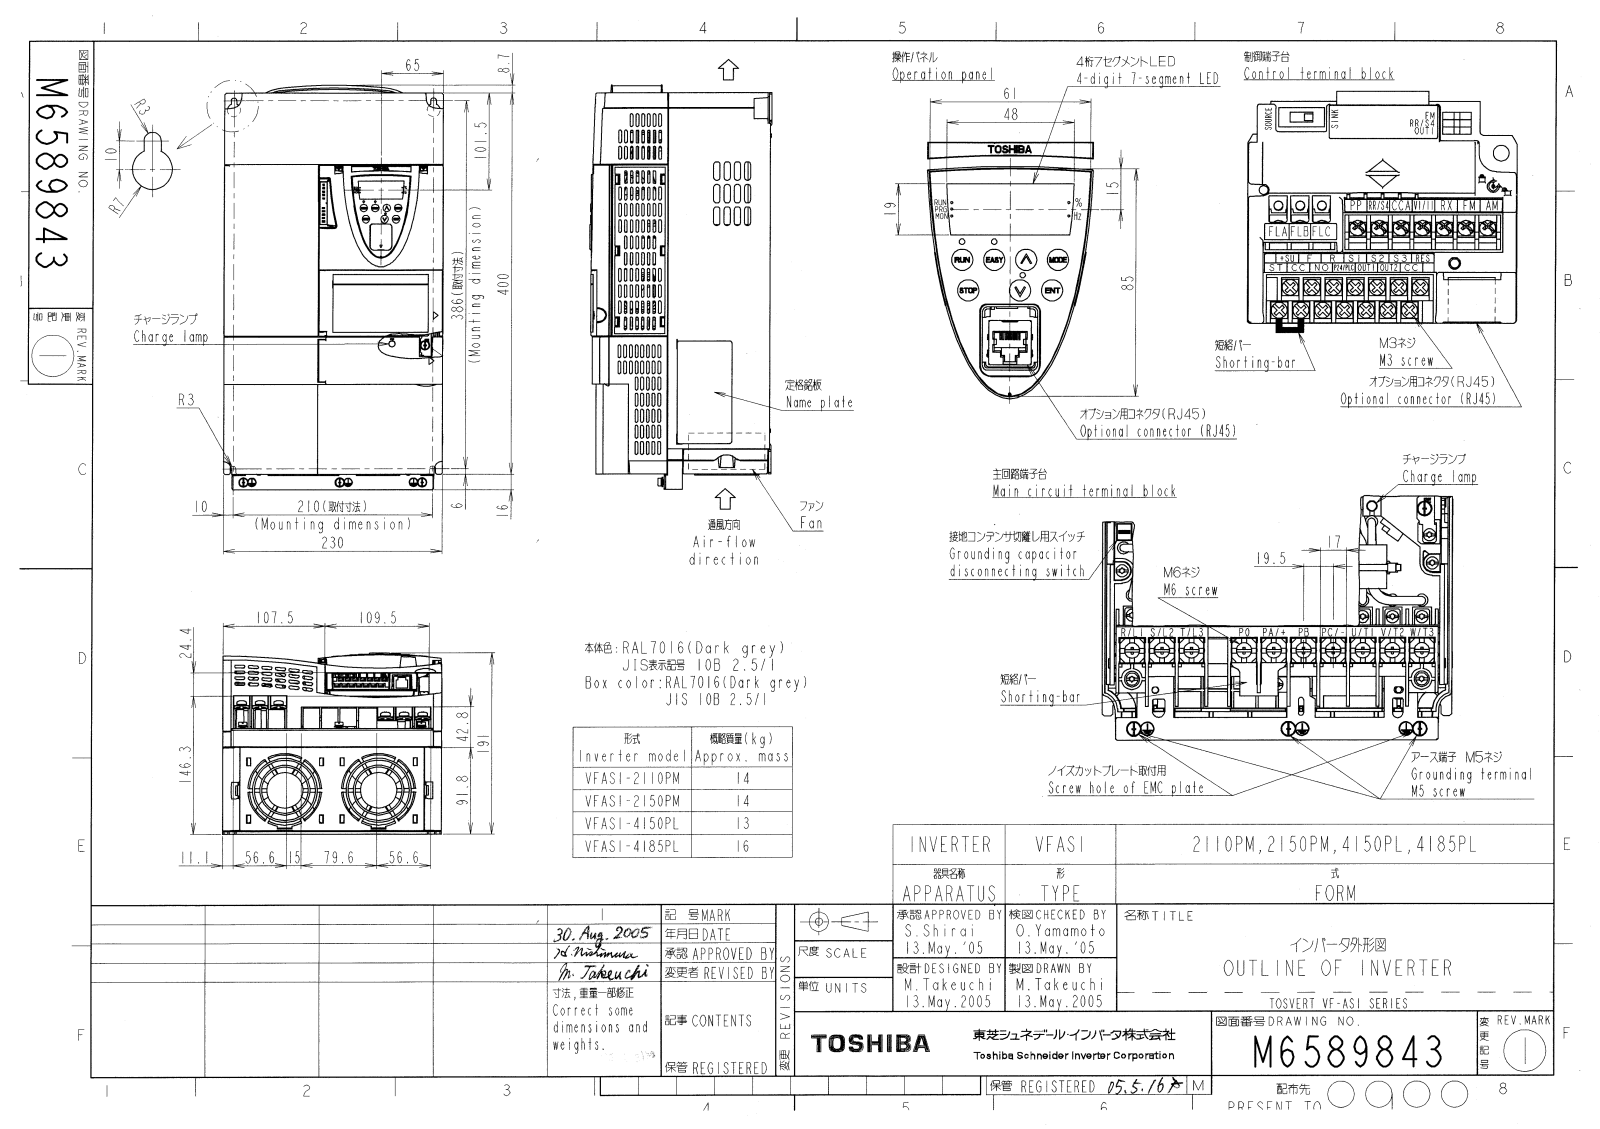 Toshiba 2110PM, 2150PM, 4150PL, 4185PL Dimensional Sheet